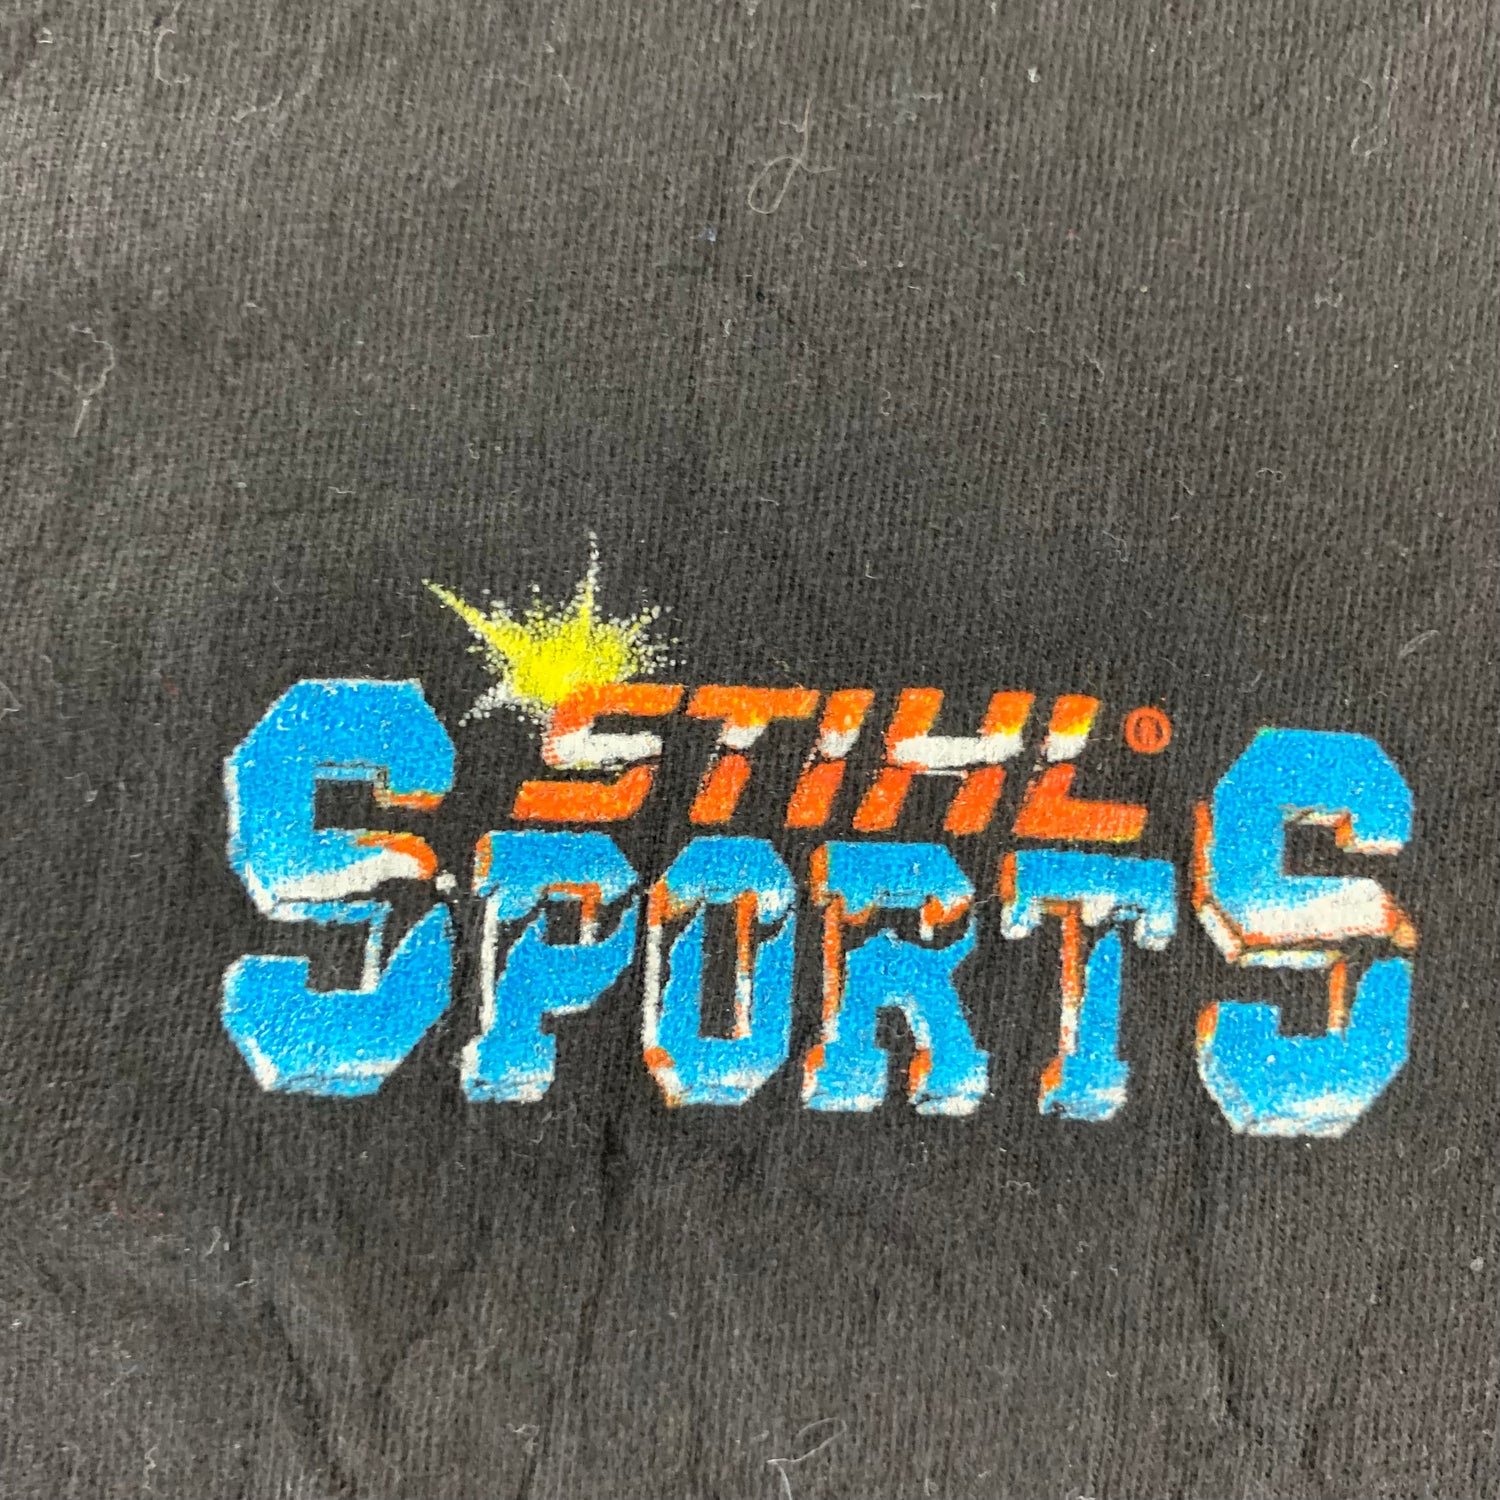 Vintage 1990s Stihl Sports T-shirt size XL